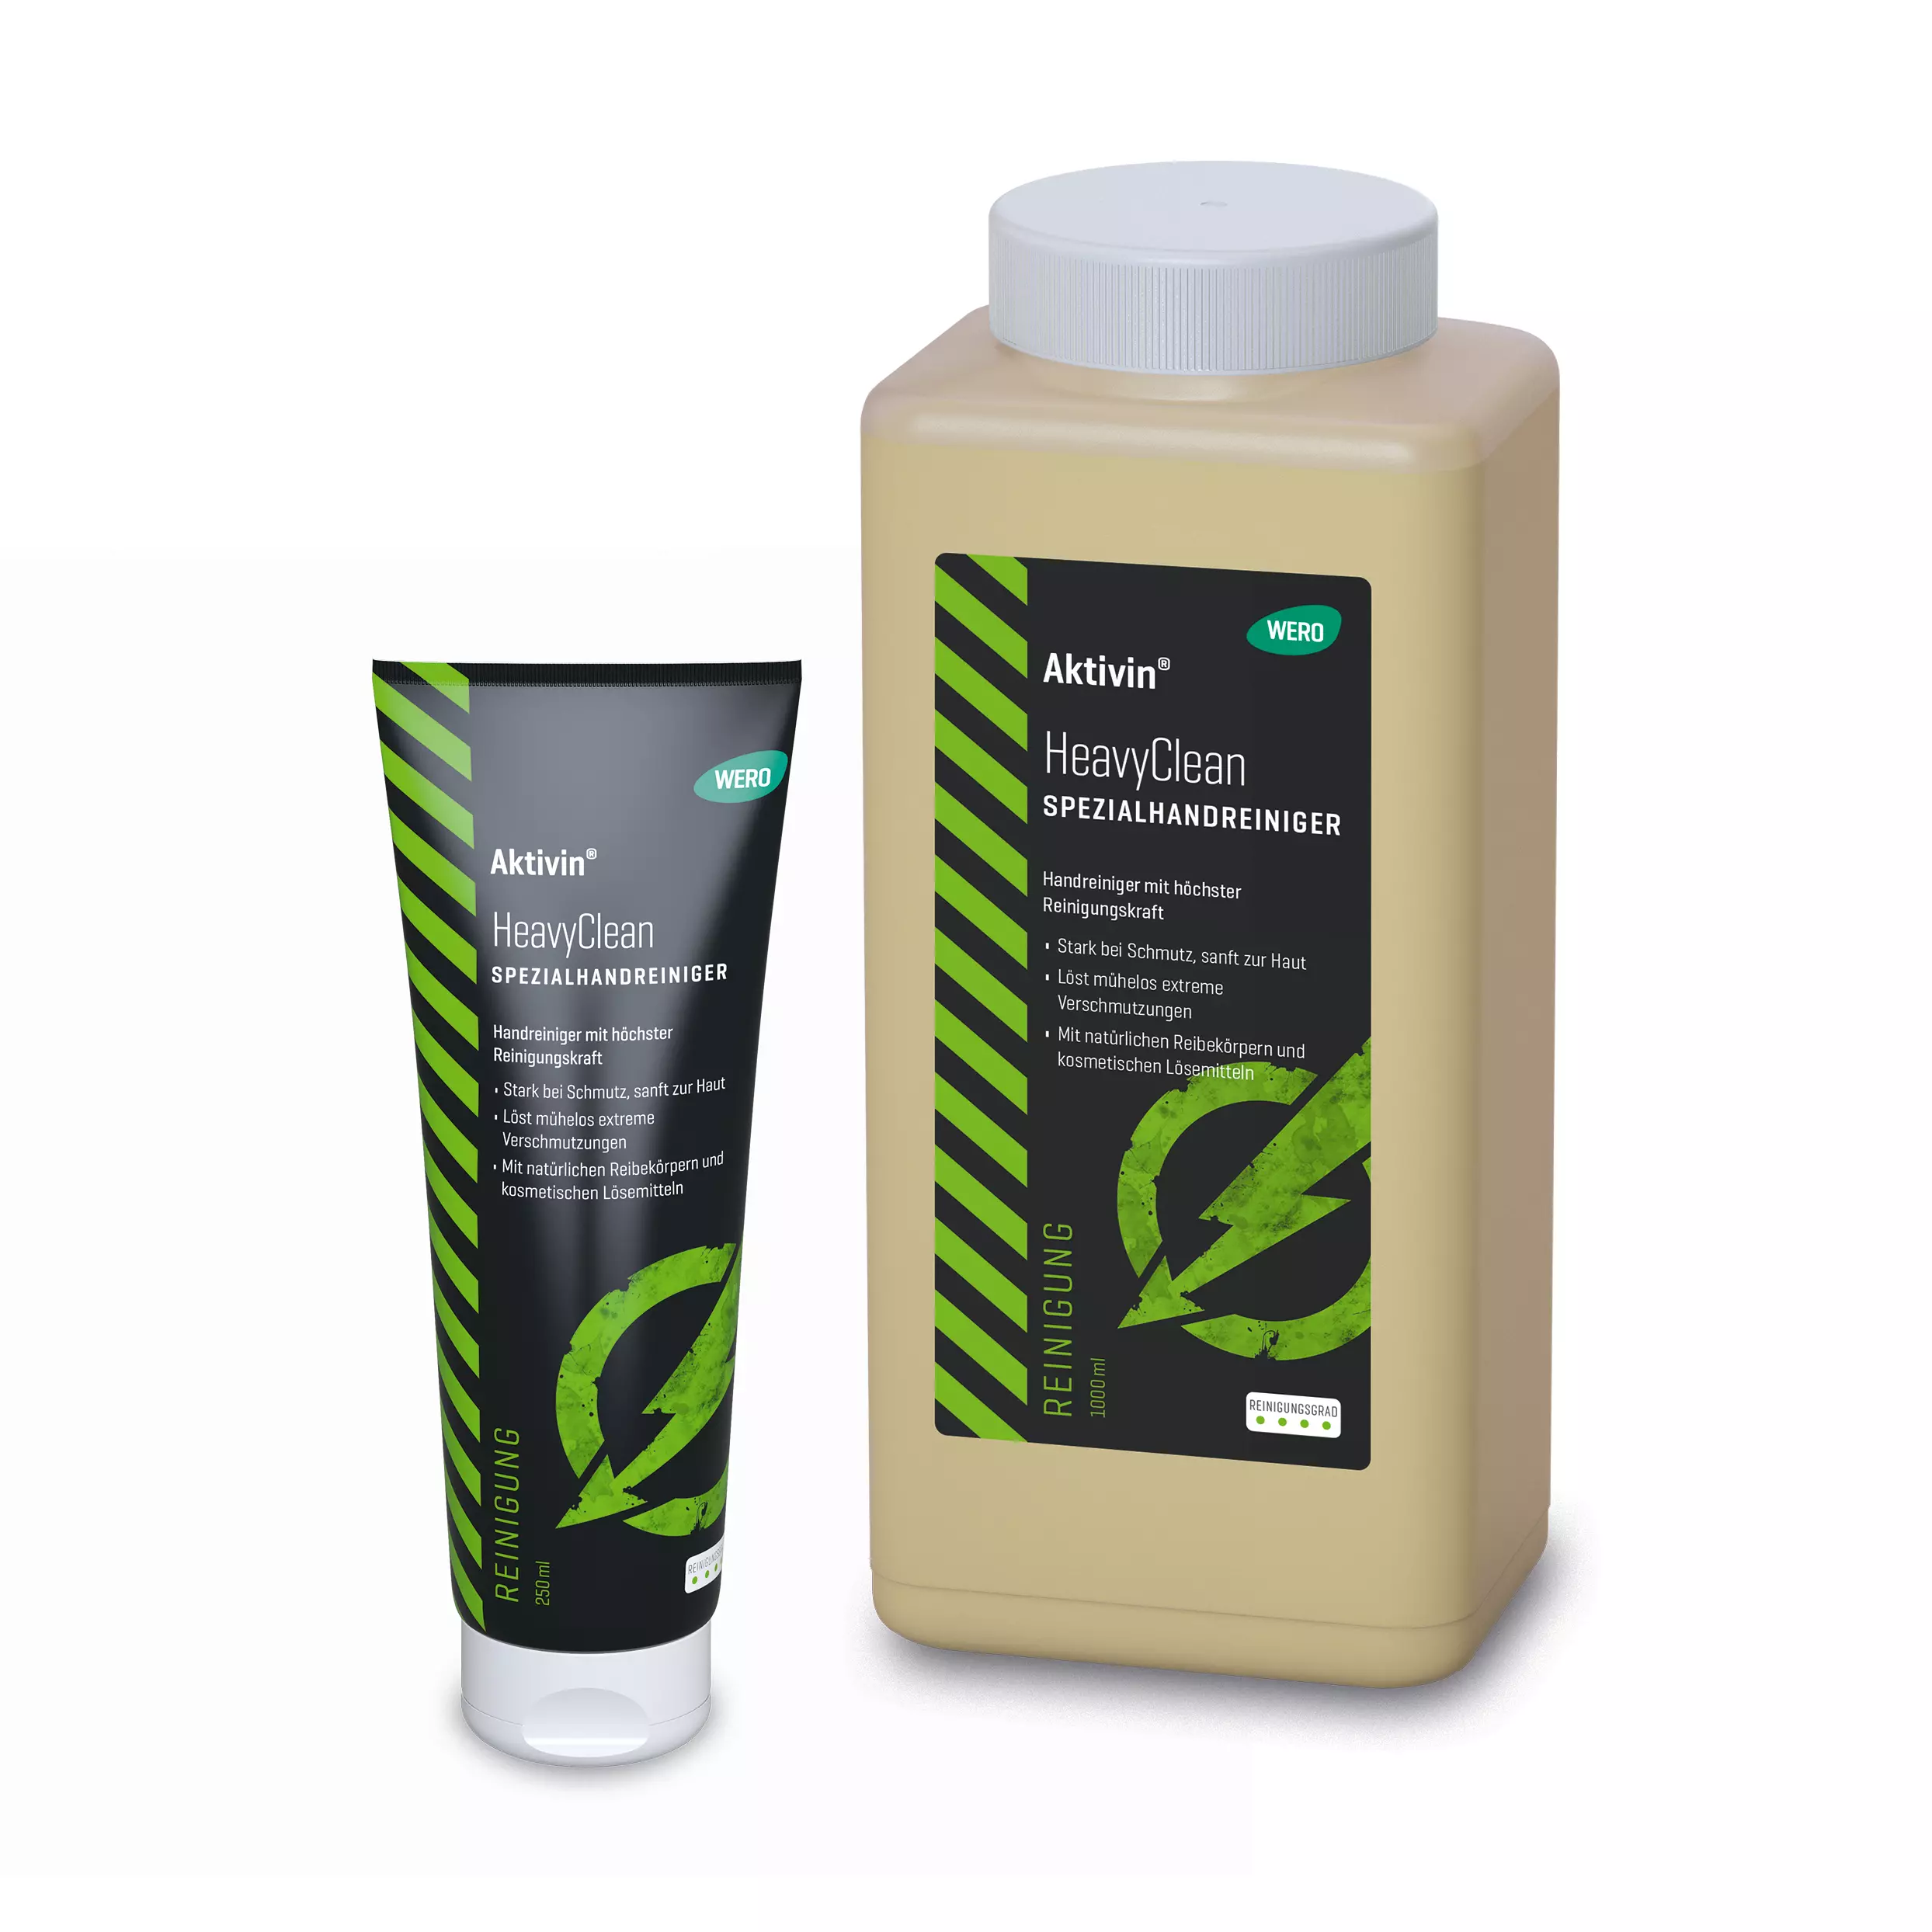 Special hand cleaner Aktivin® HeavyClean - Euro bottle, 1,000 ml